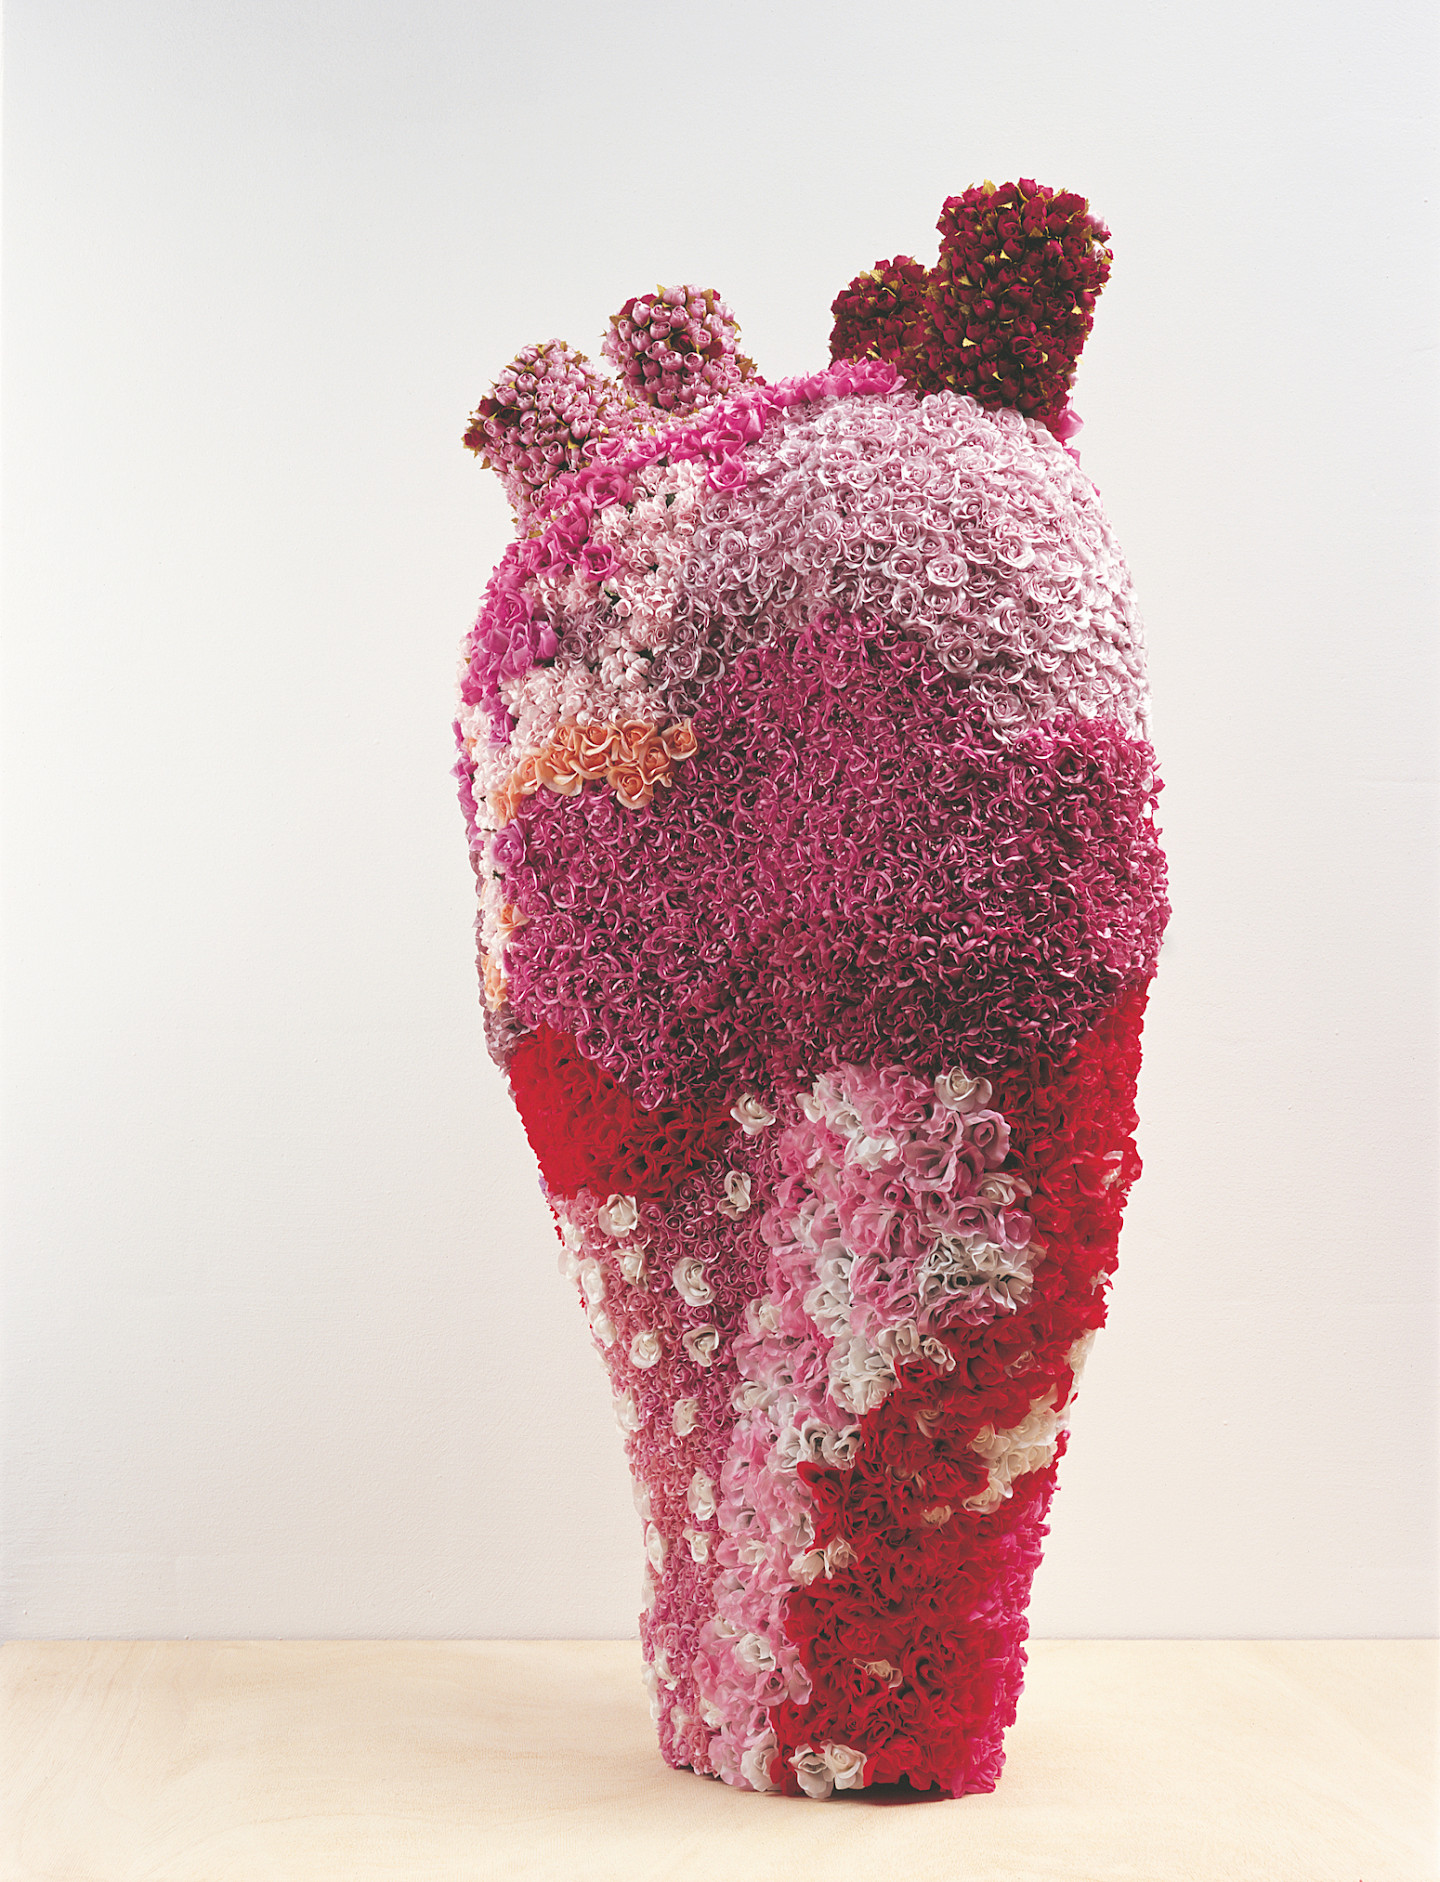 Michael von Brentano, As if you knew everything, 2004, Silk flowers on a metal framework 140 x 64 x 48 cm